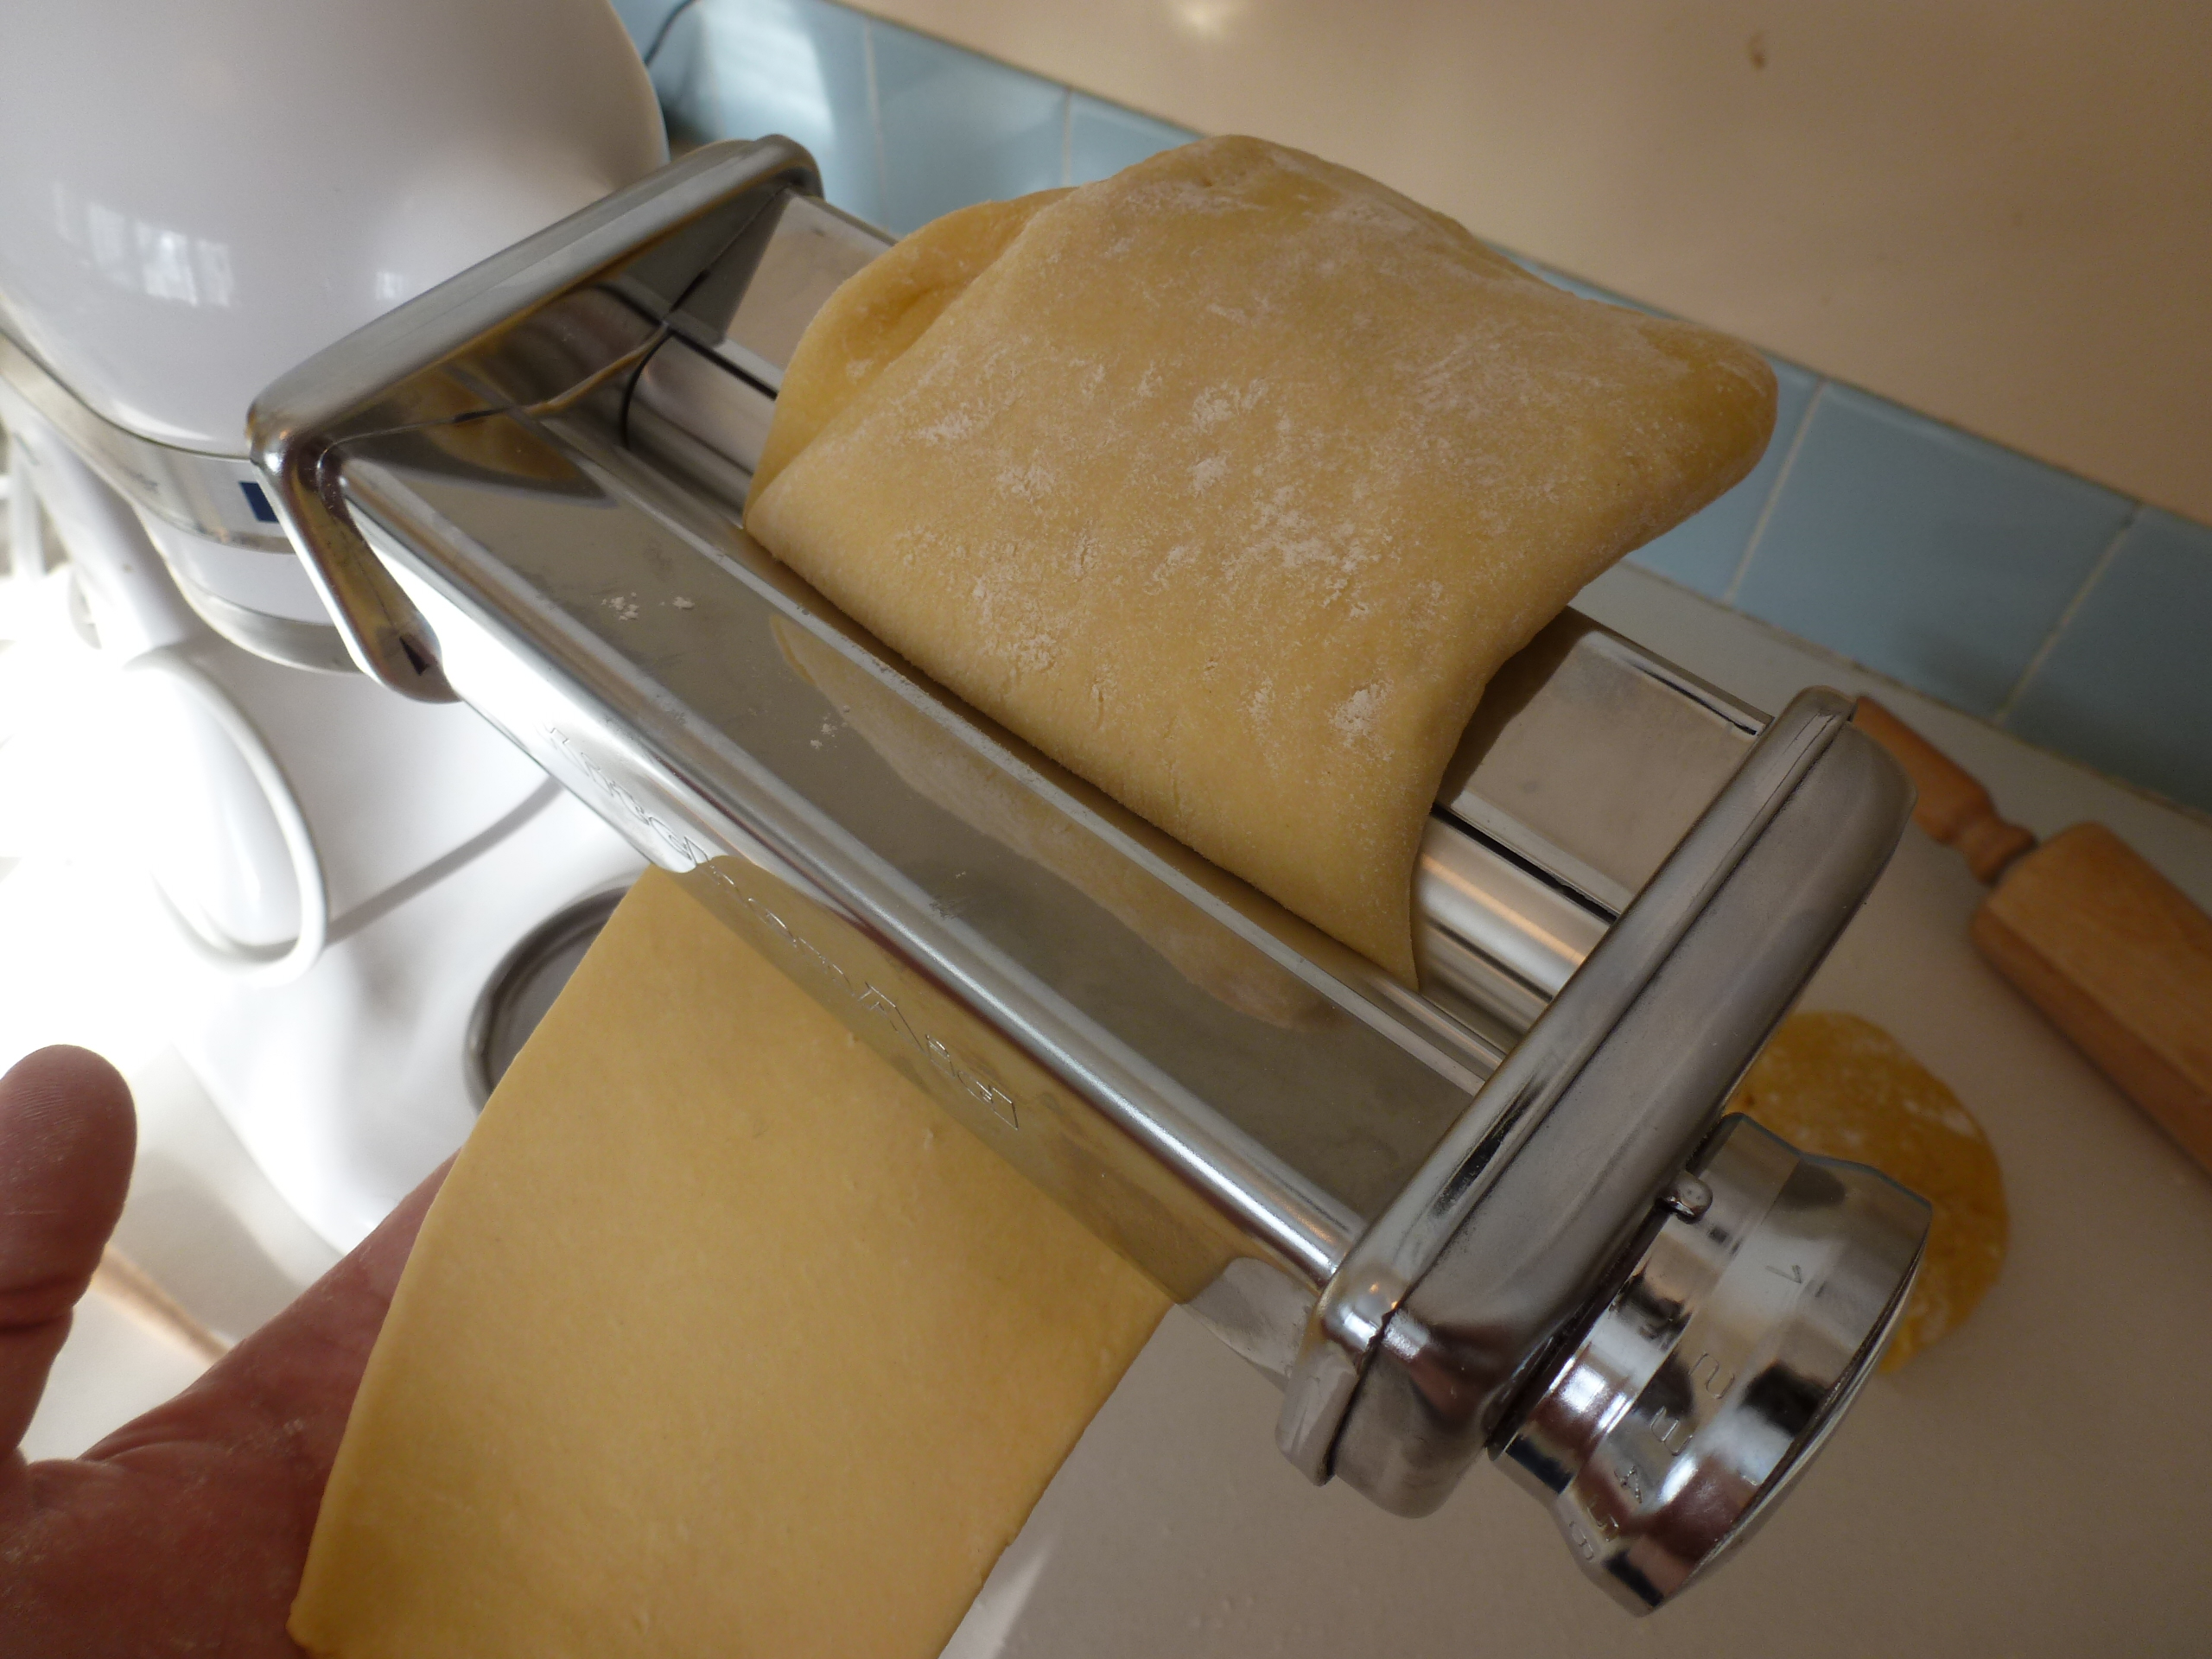 Putting the dough through a roller